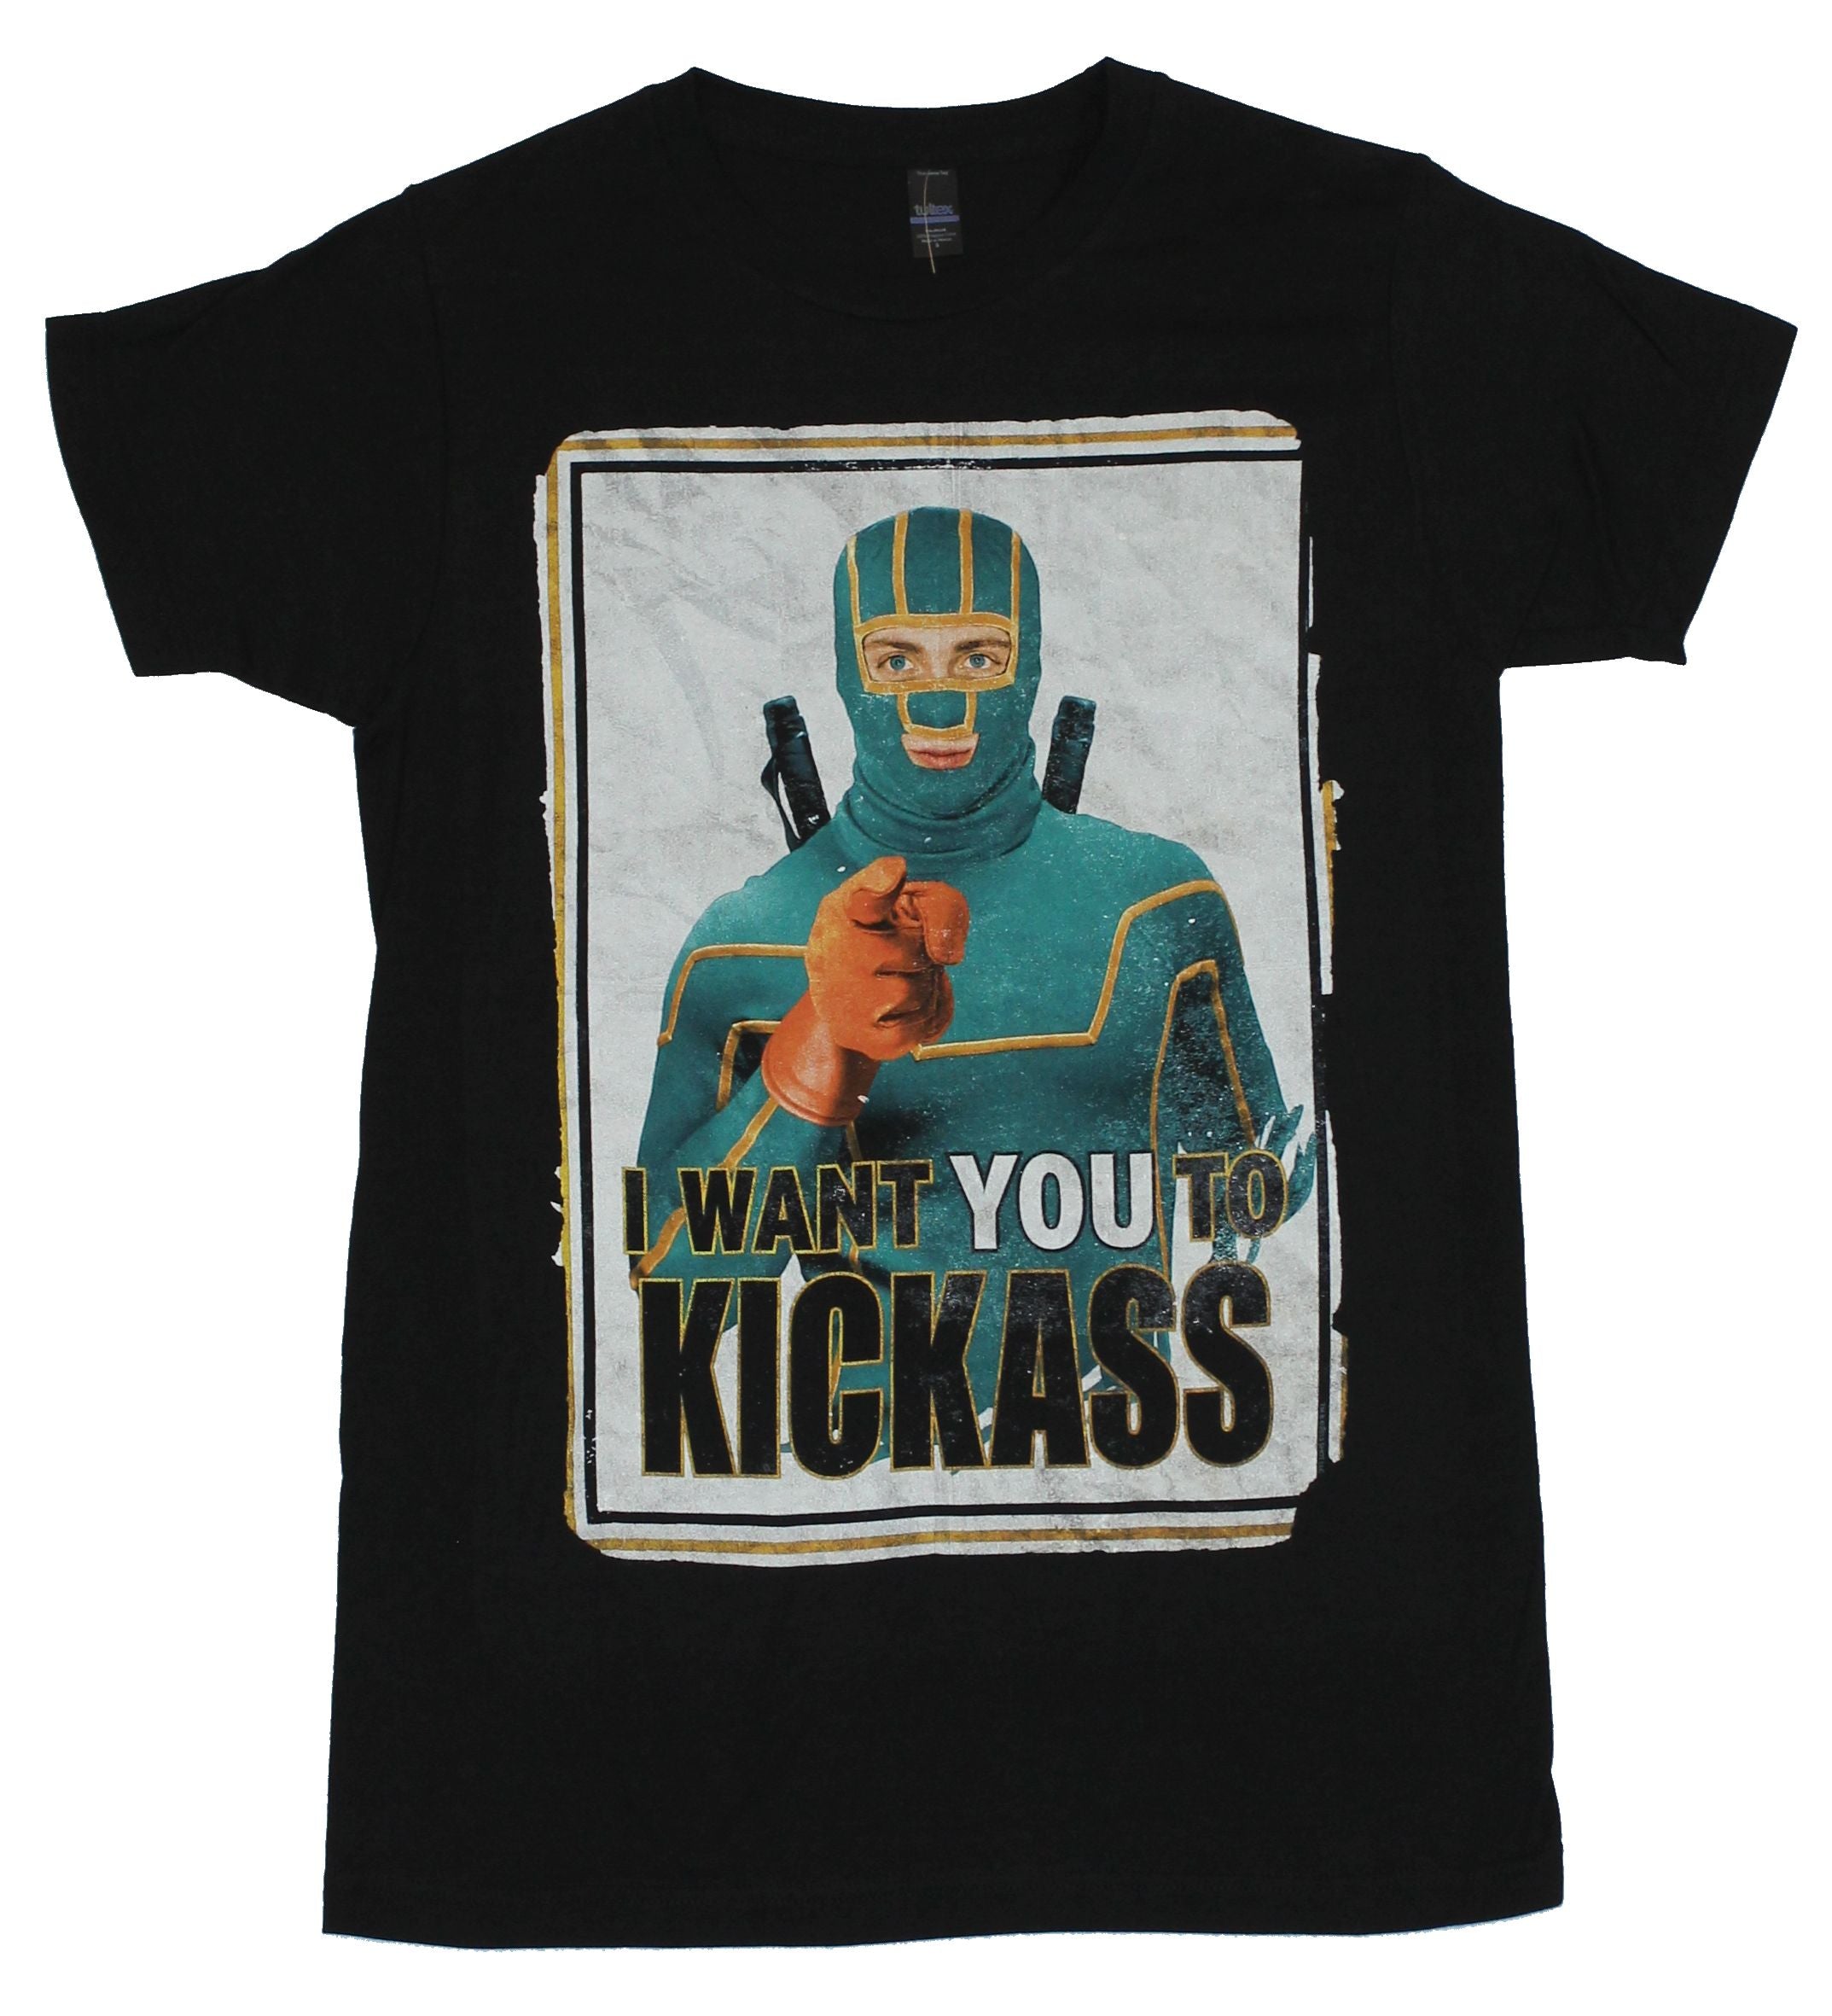 Kick Ass Mens T-Shirt -  "I Want You To Kick Ass" Pointing Image